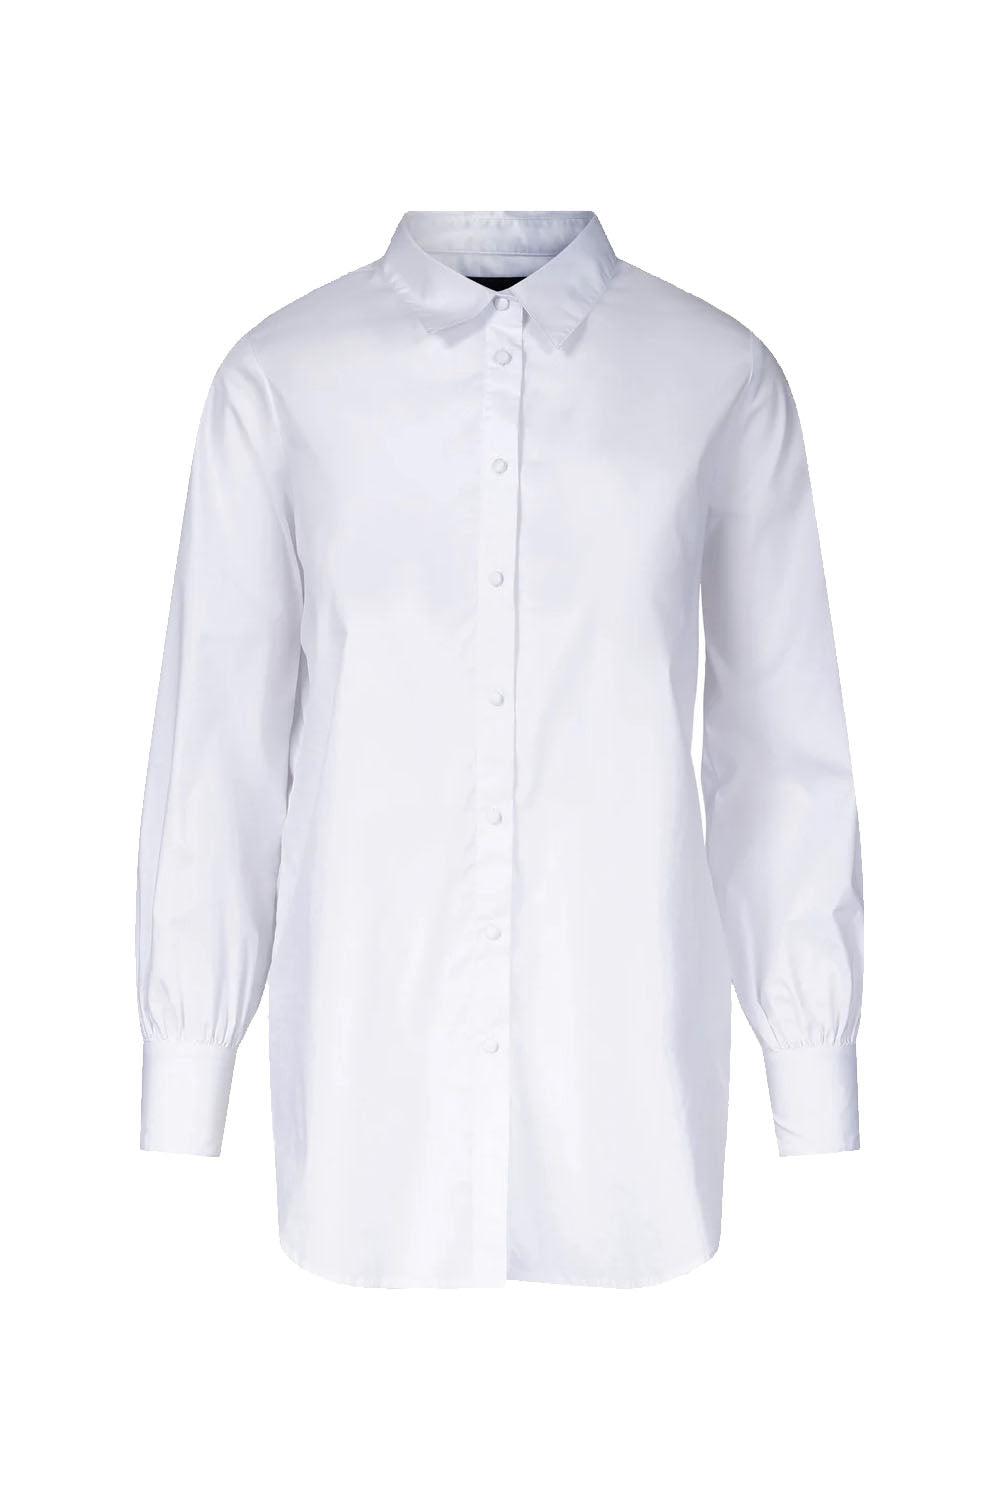 Linni Shirt White